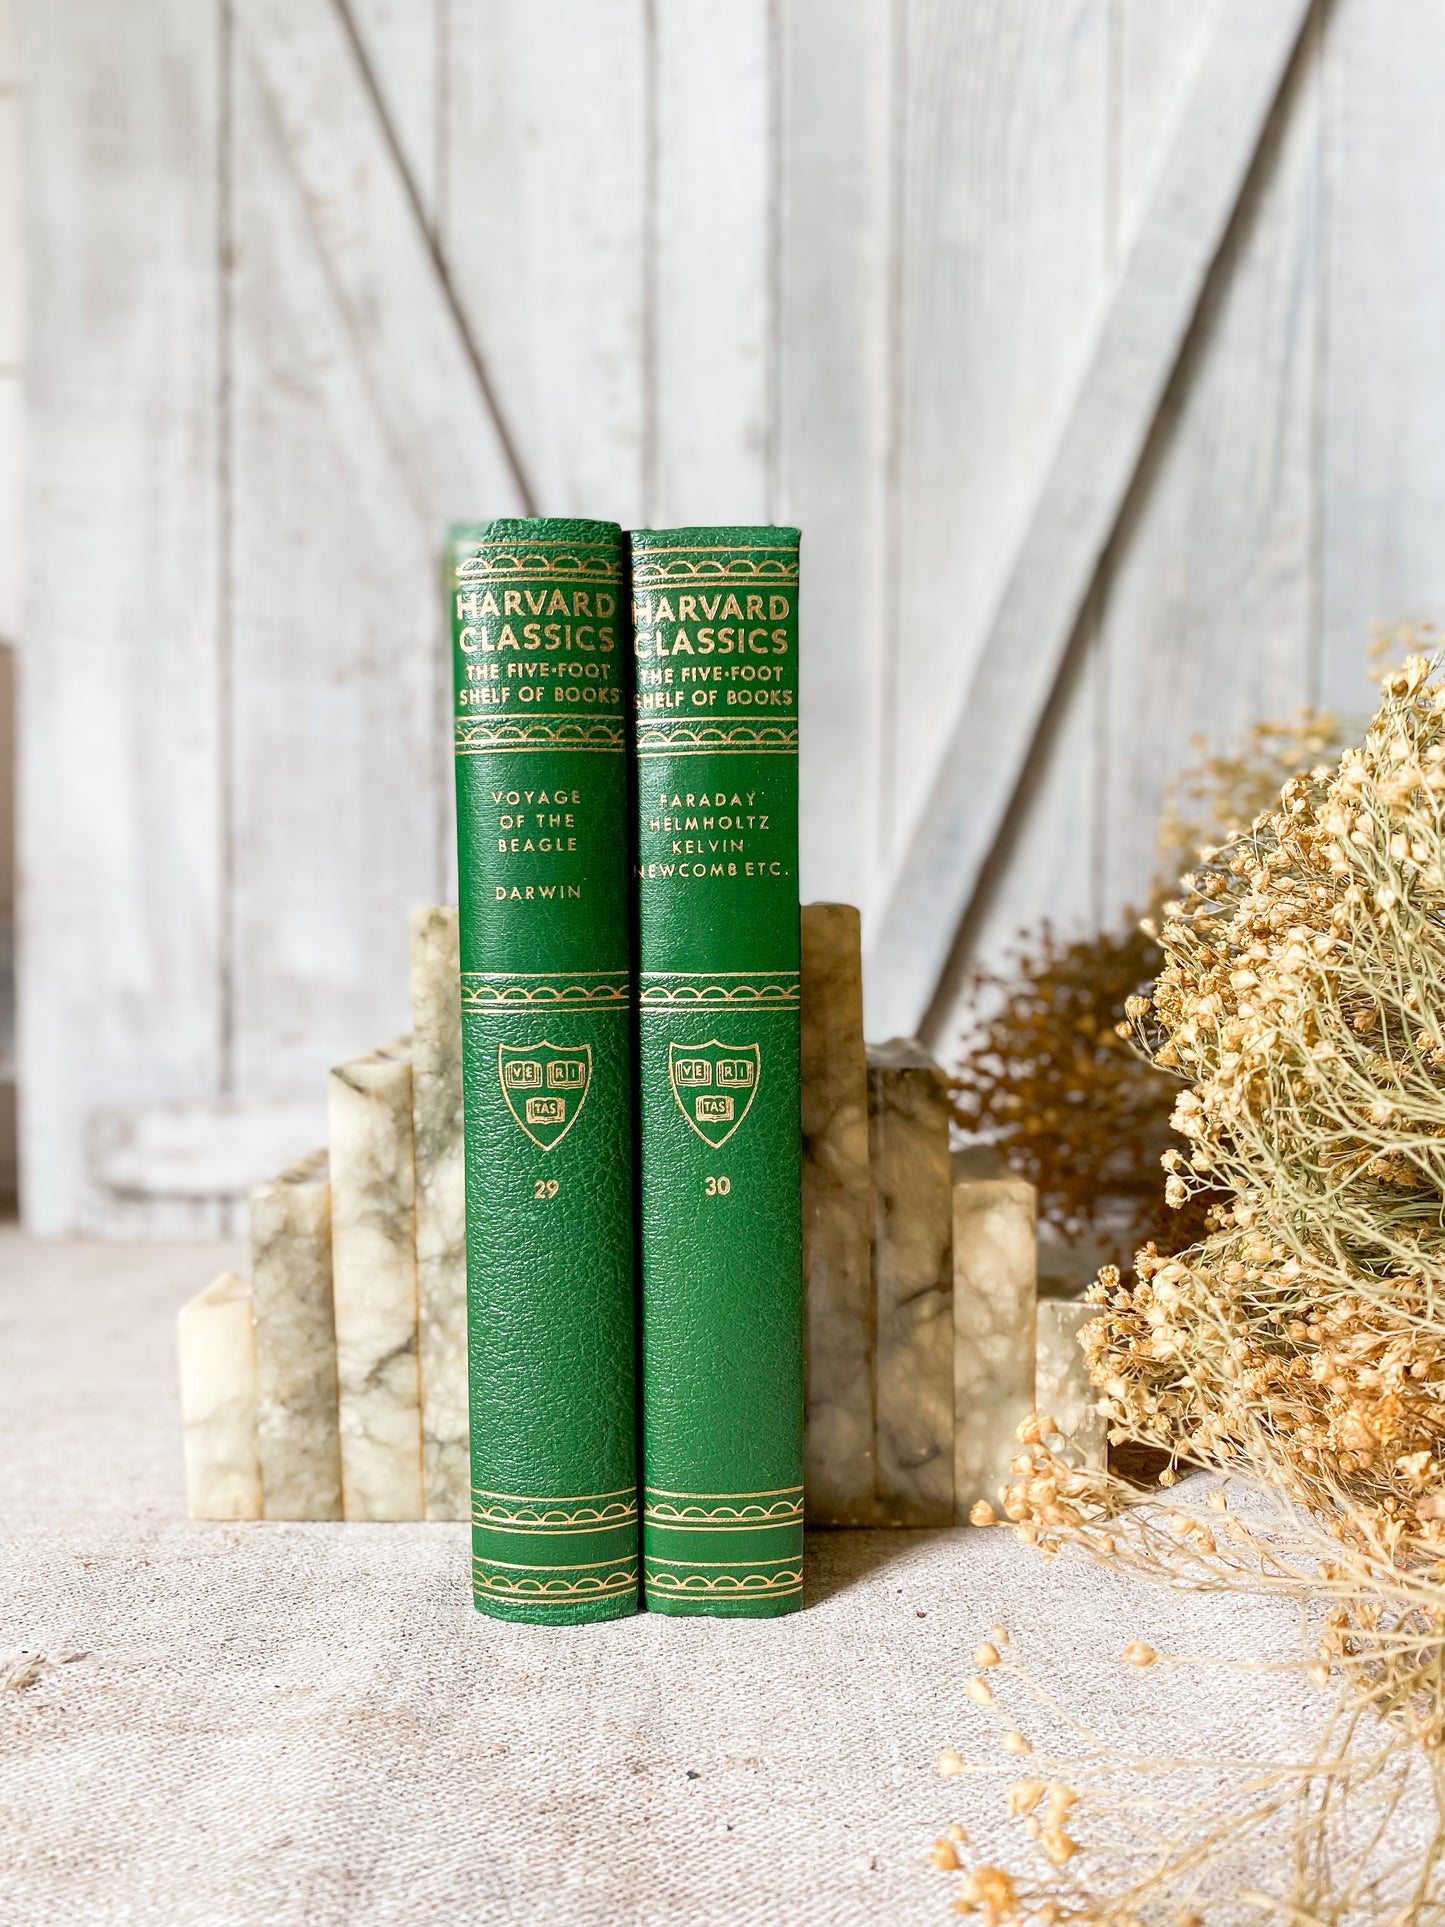 Vintage Set of 2 Green Harvard Classics Five-Foot Shelf of Books, 1959